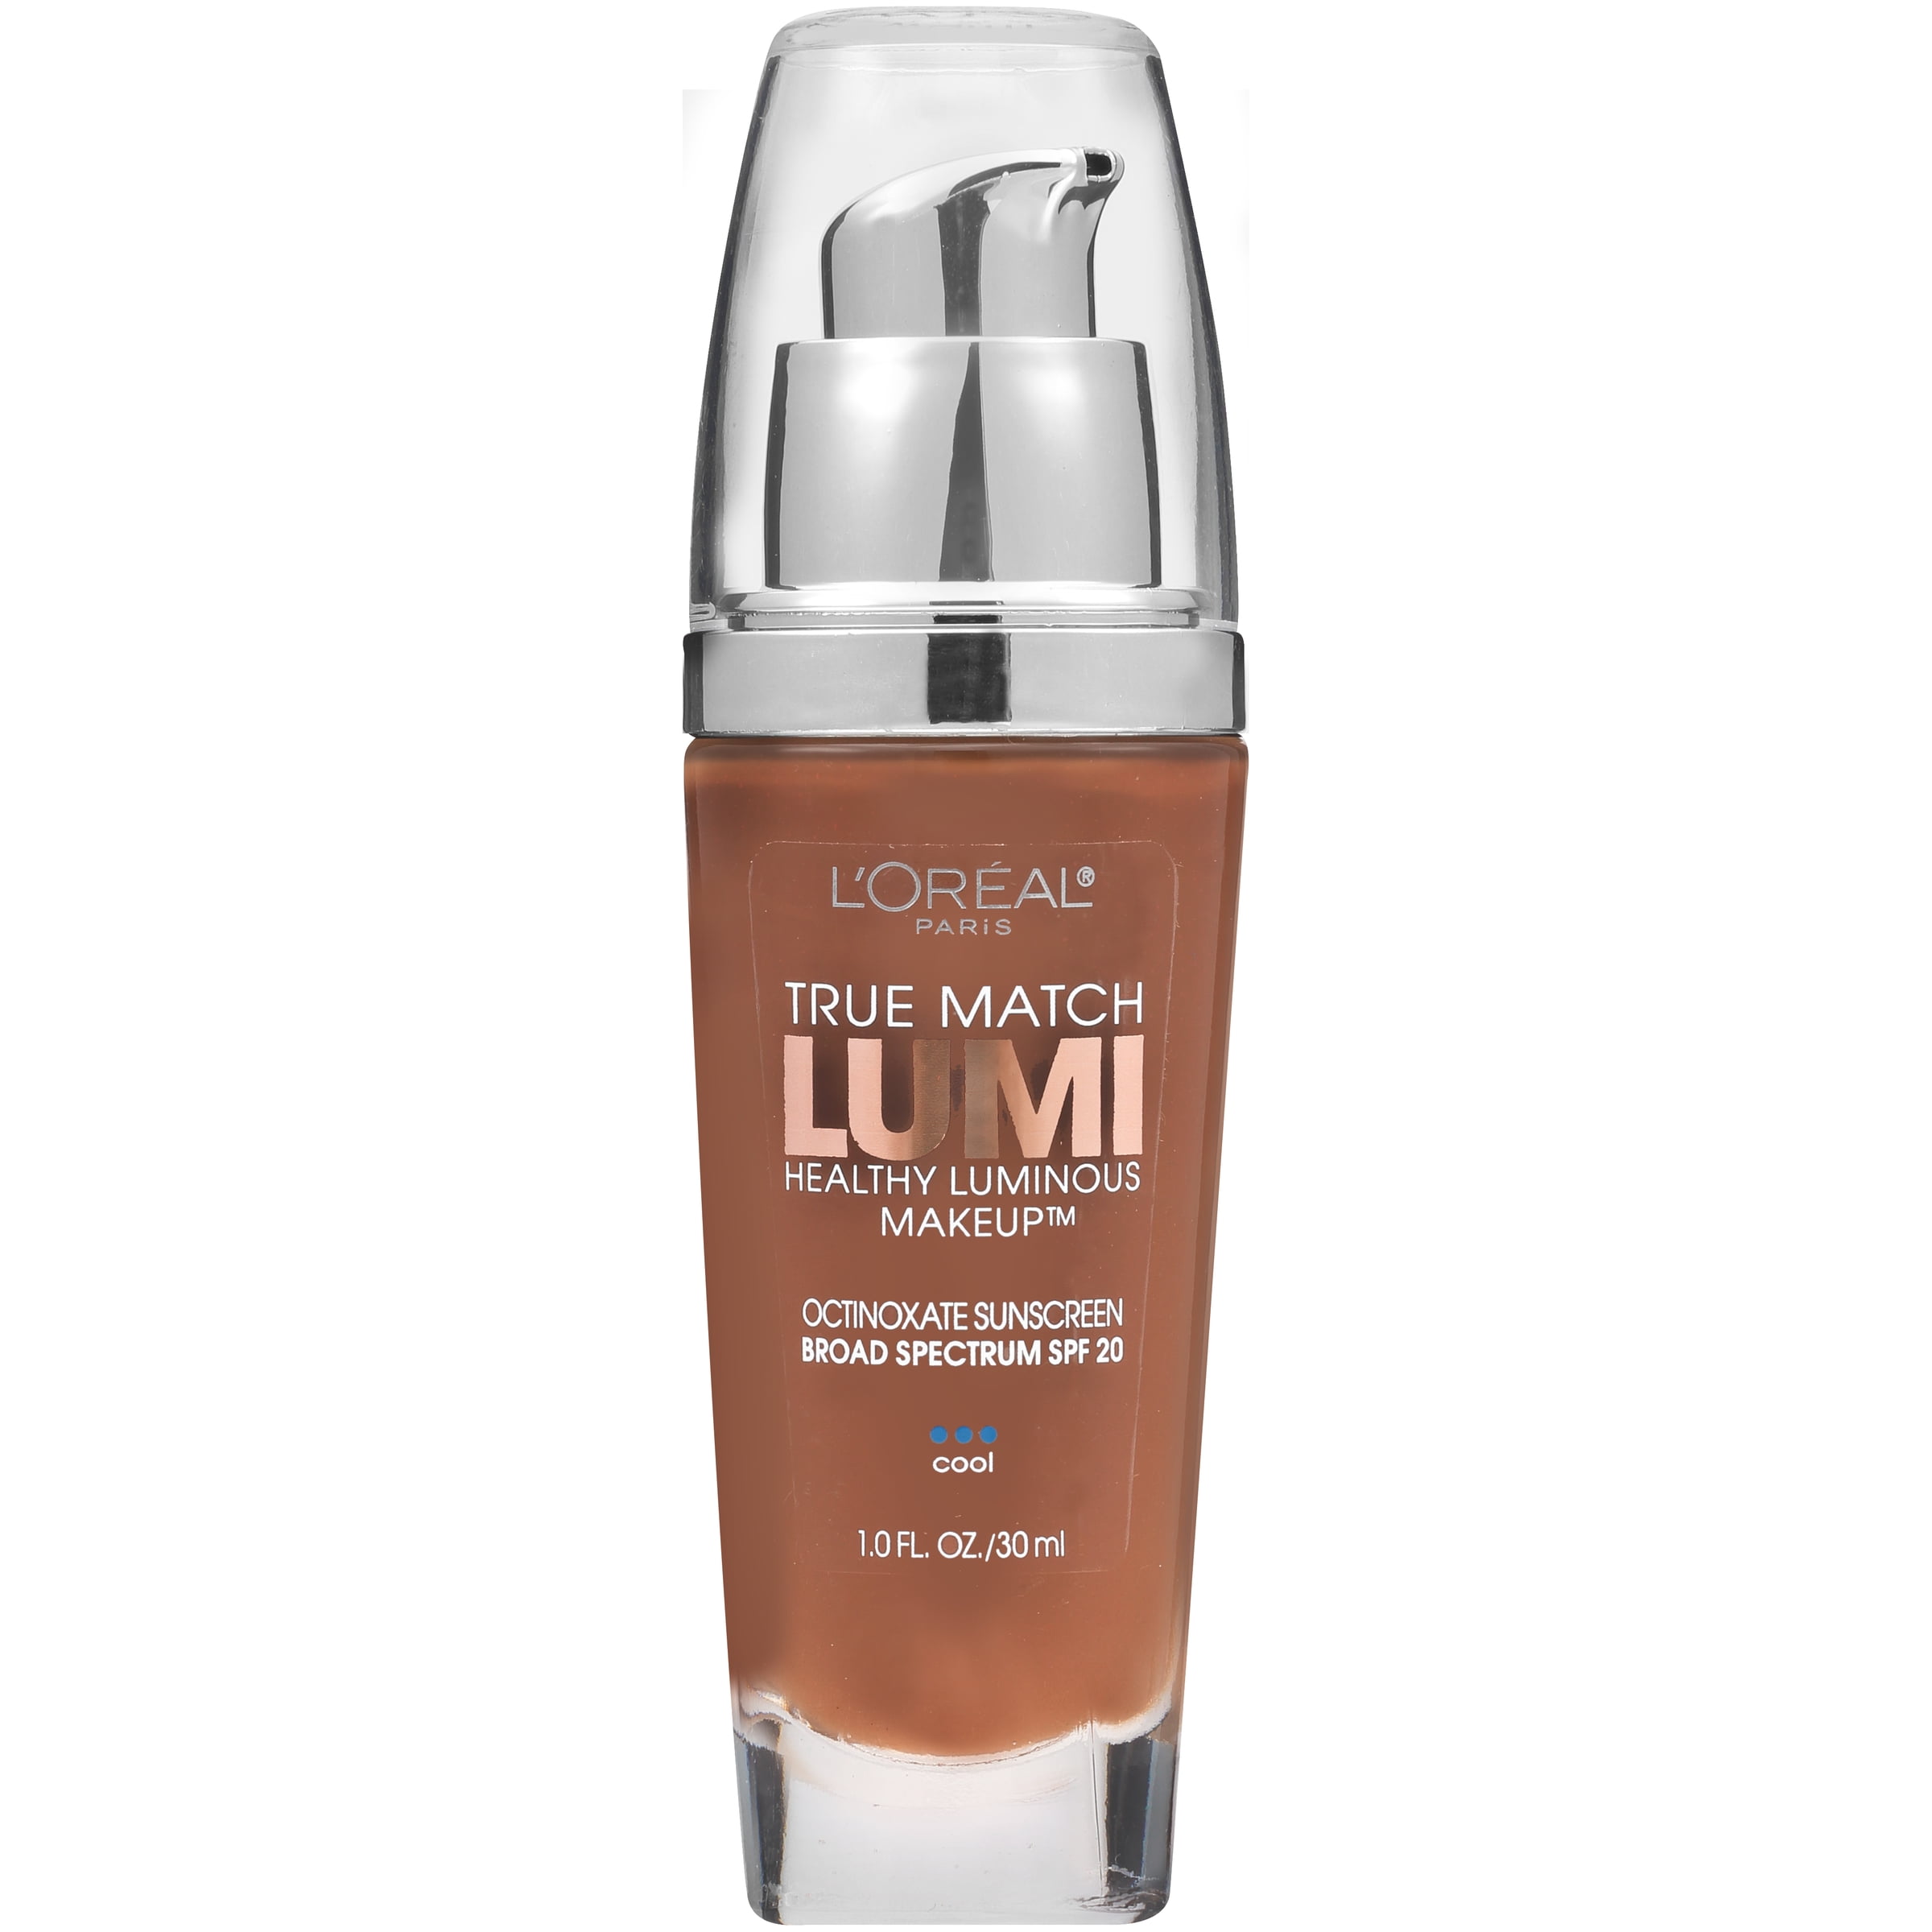 L'Oreal Paris True Match Lumi Liquid Foundation Makeup, C7-8 Nut Brown and Cocoa, 1 fl oz